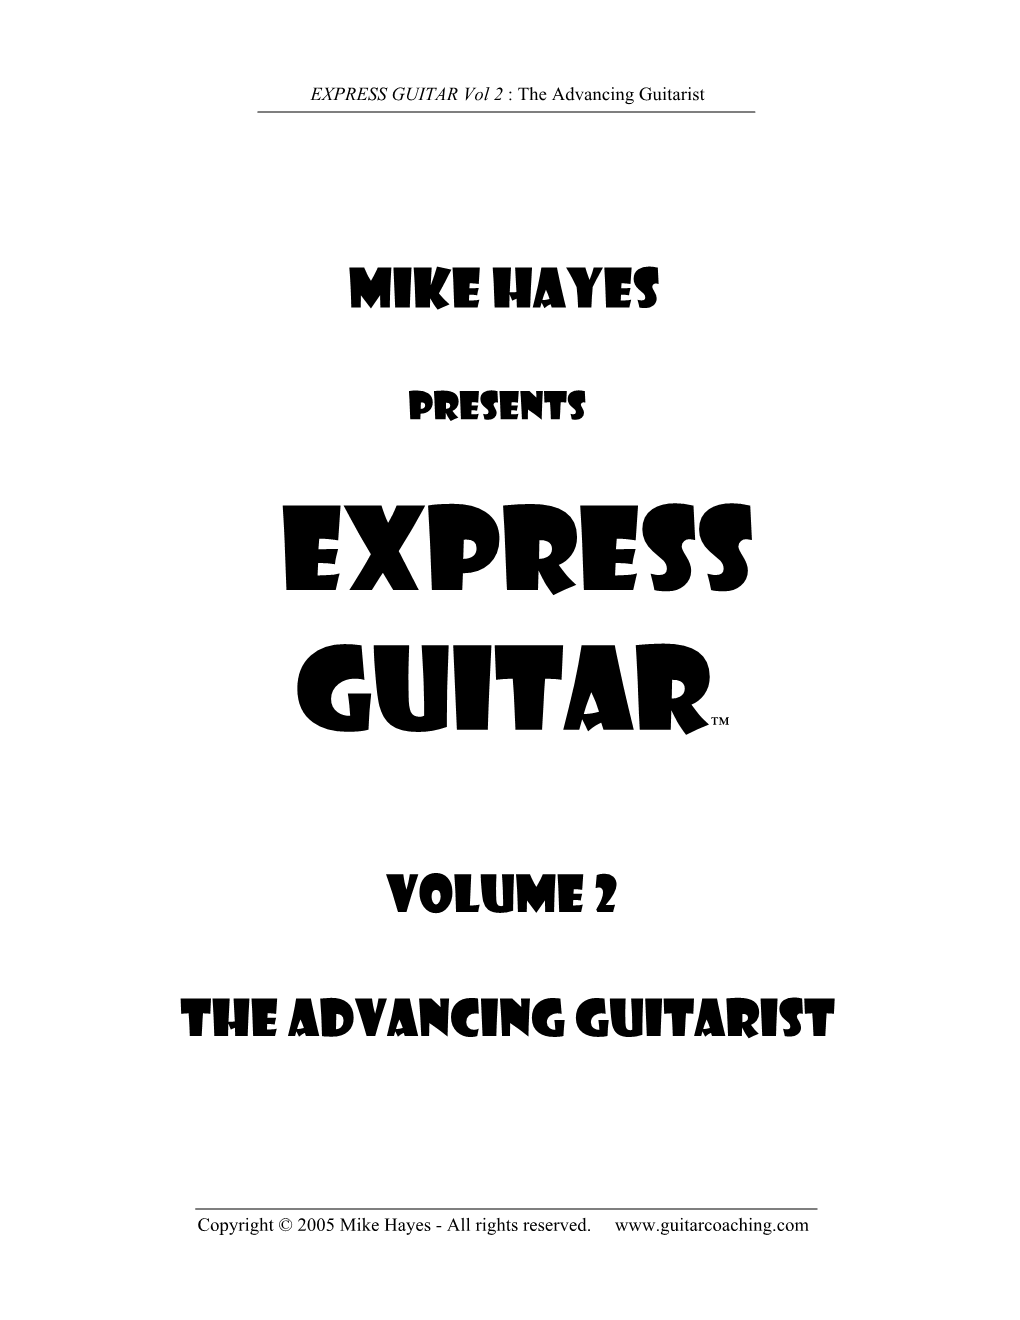 Express Guitar™ Volume 2